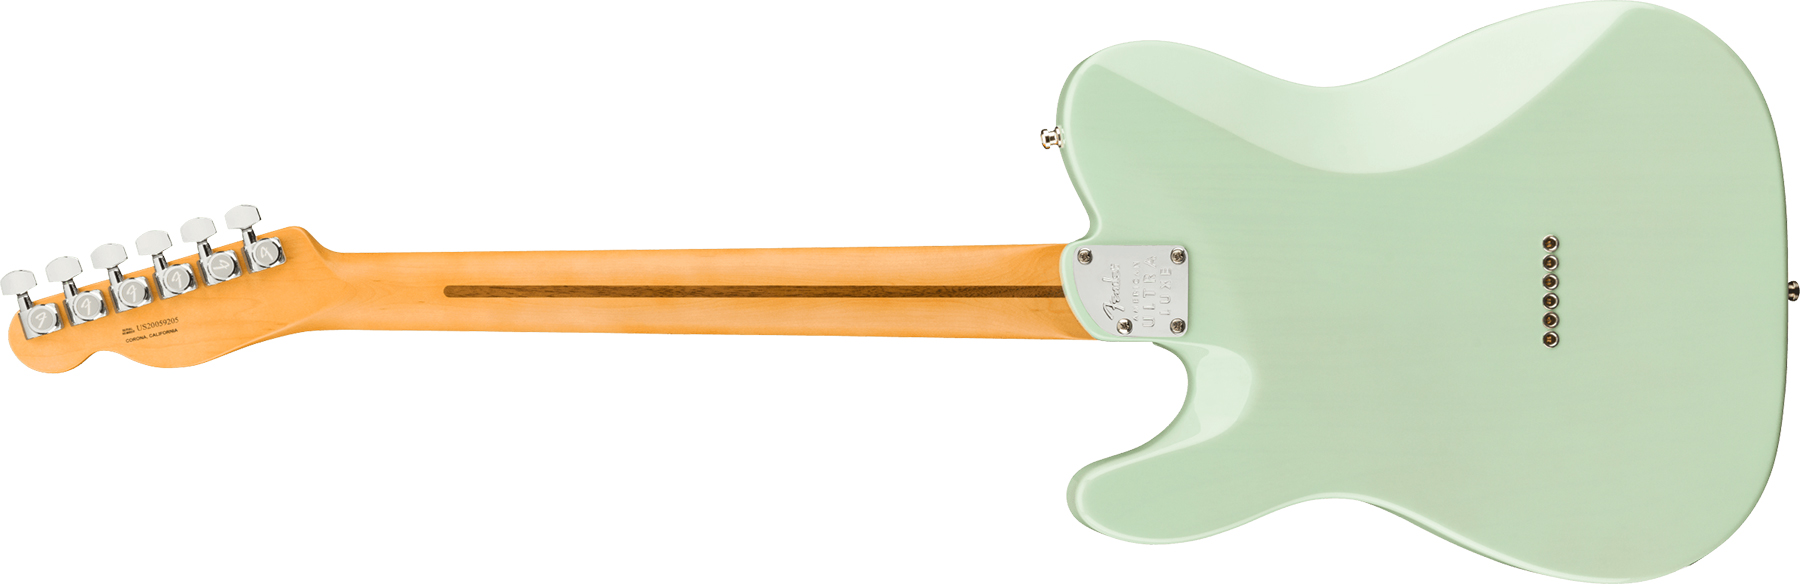 Fender Tele American Ultra Luxe Usa Rw +etui - Transparent Surf Green - Guitarra eléctrica con forma de tel - Variation 1